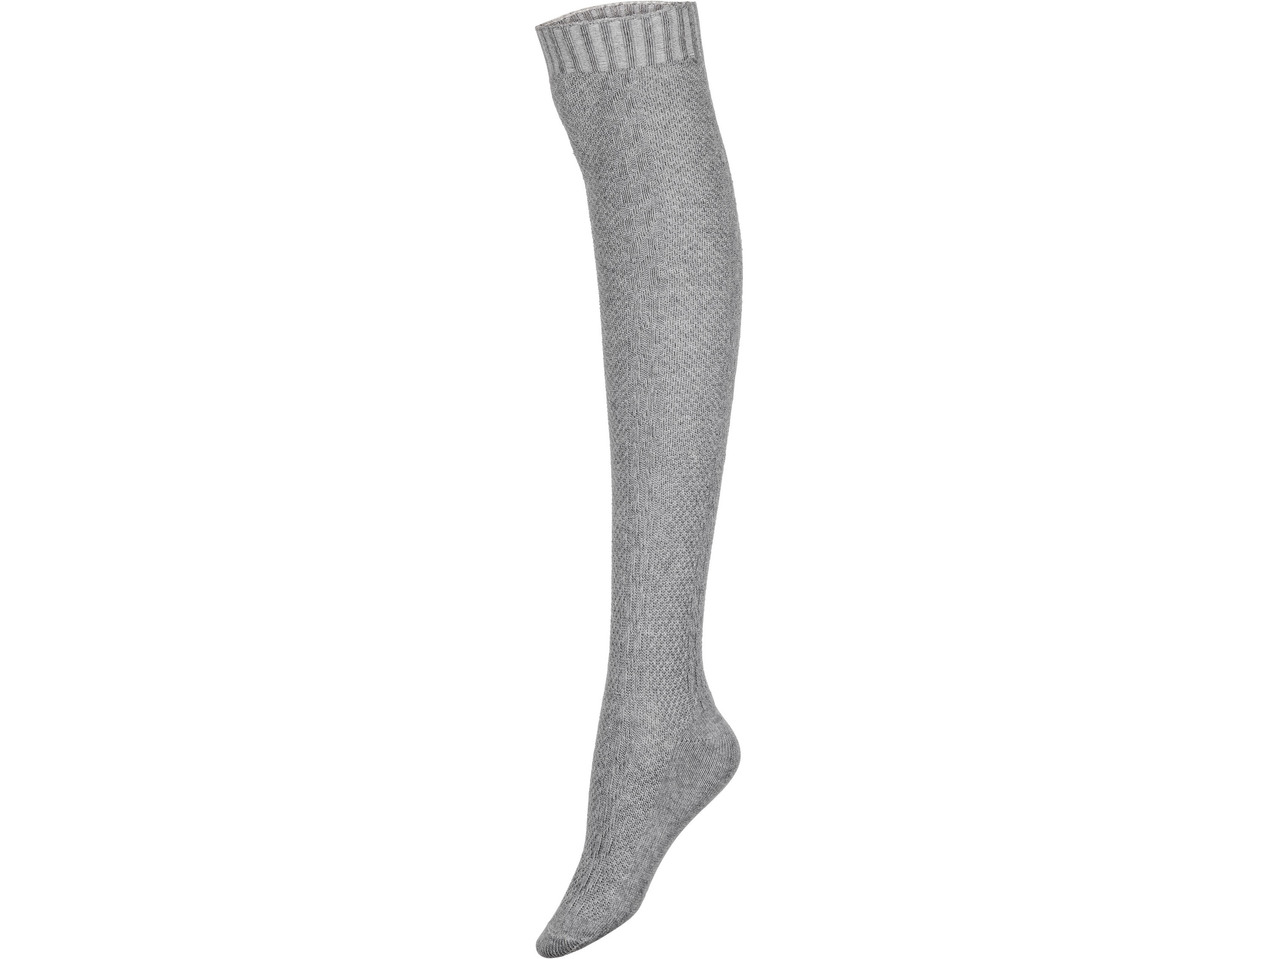 Ladies' Over The Knee Socks or Leg Warmers - Winter Comfort